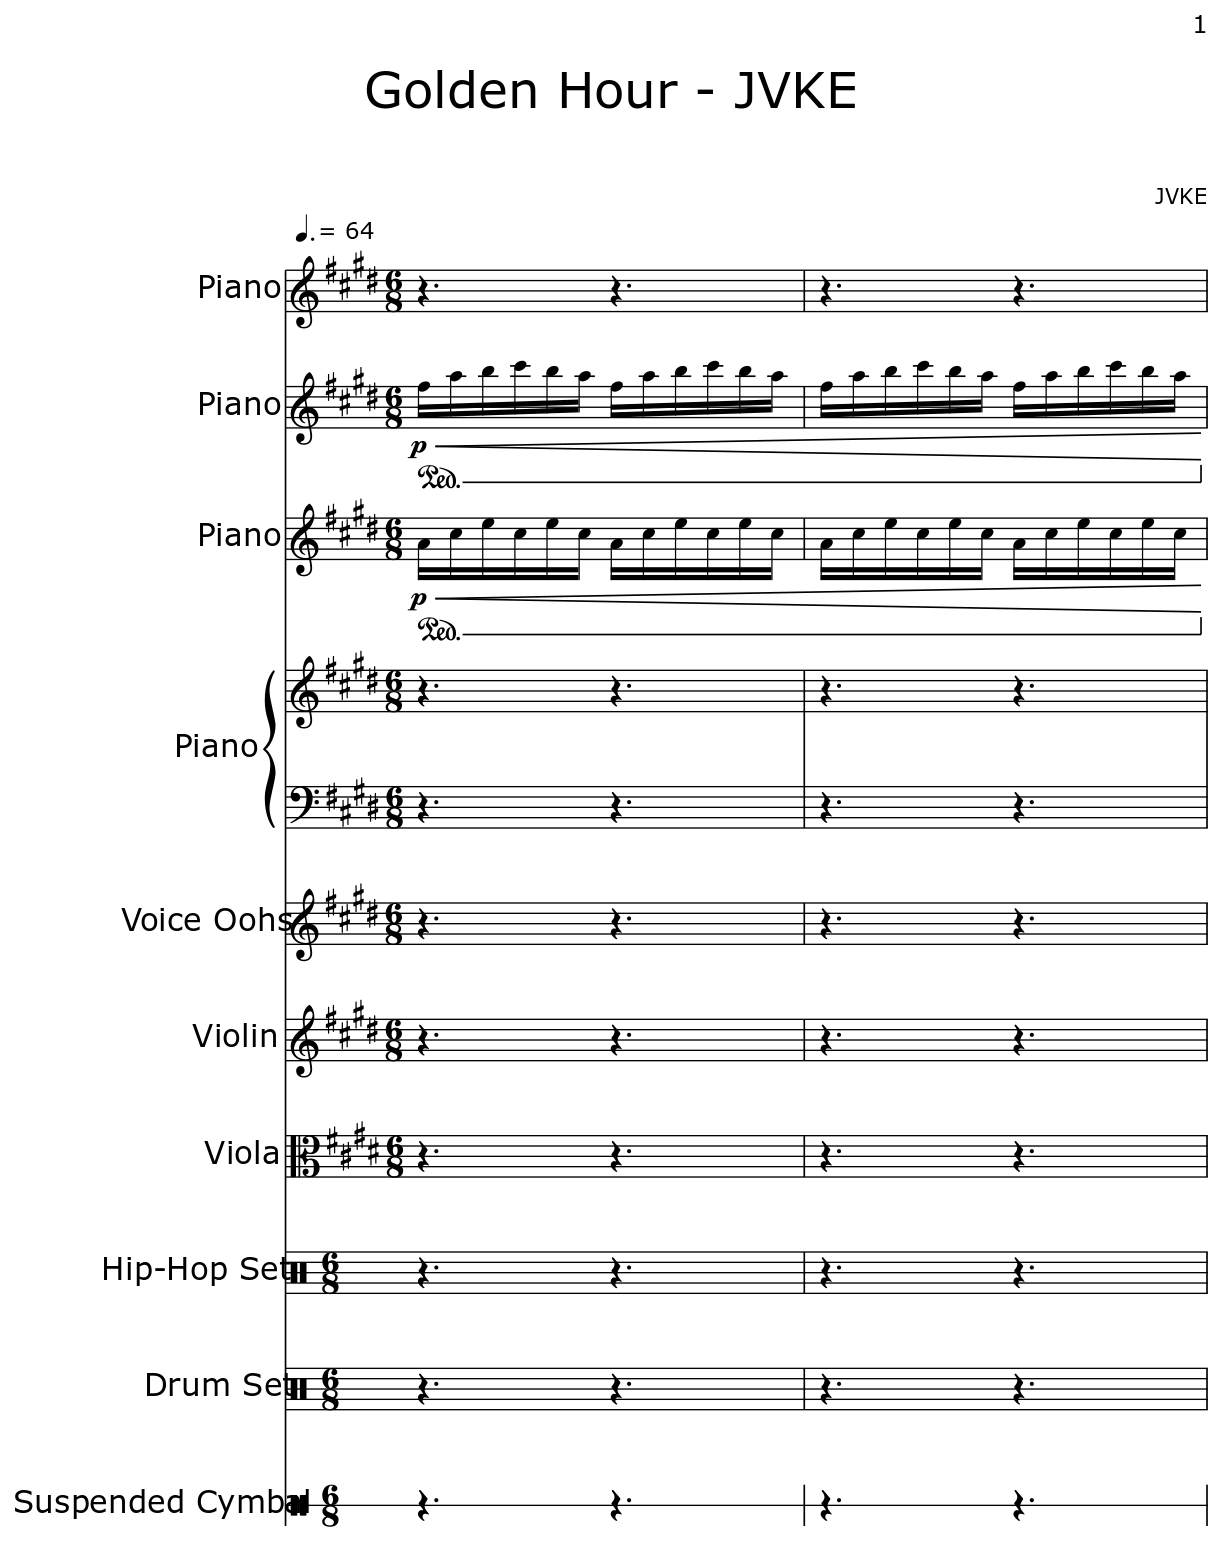 Golden Hour - JVKE - Sheet music for Piano, Voice Oohs, Violin, Viola